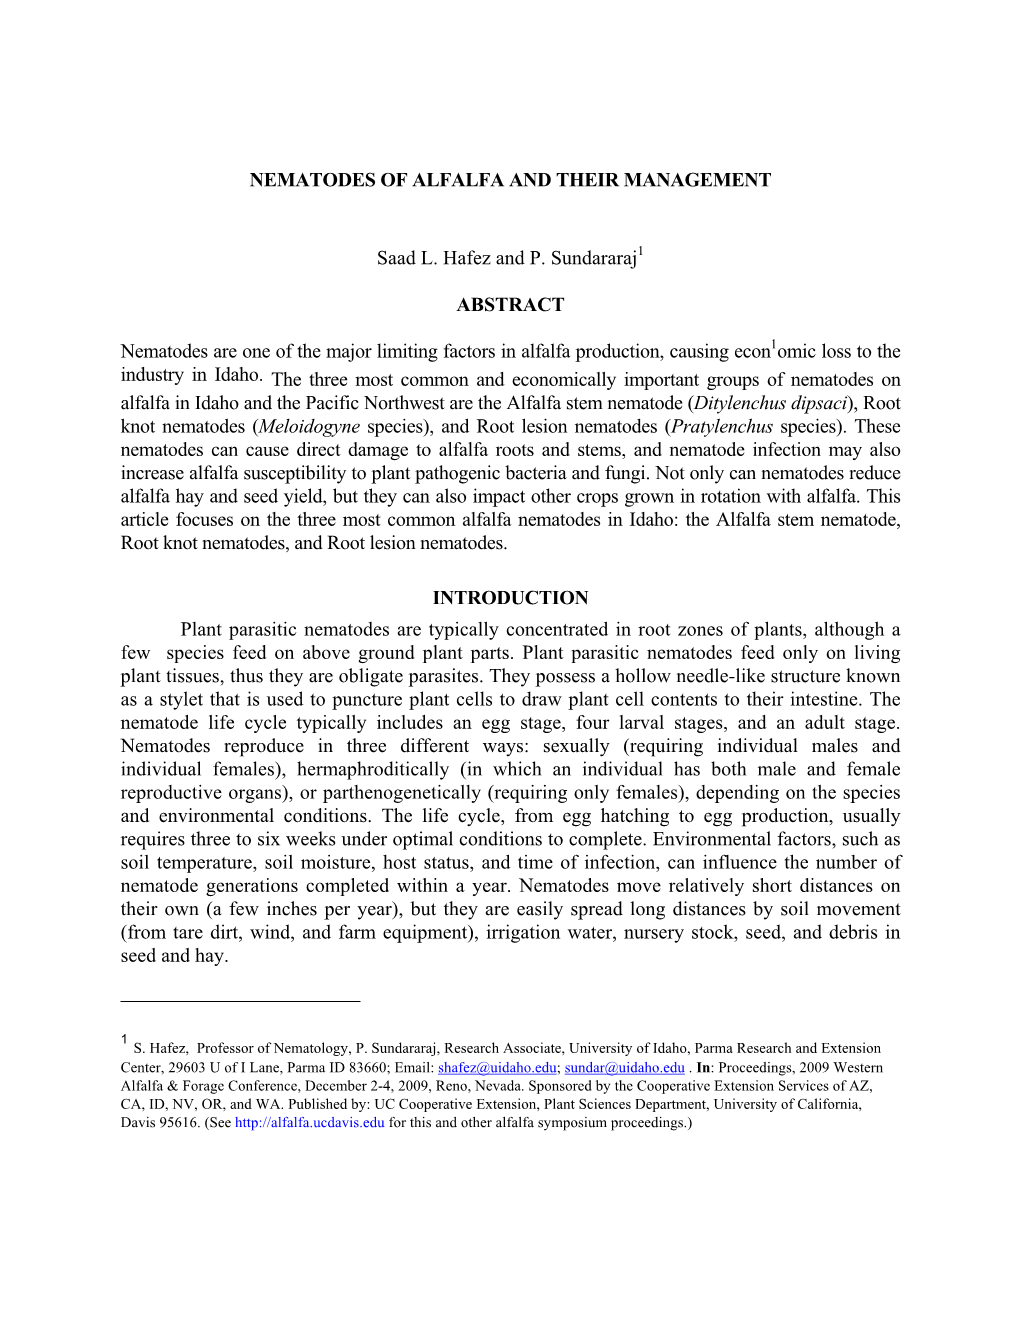 Nematodes of Alfalfa and Their Management